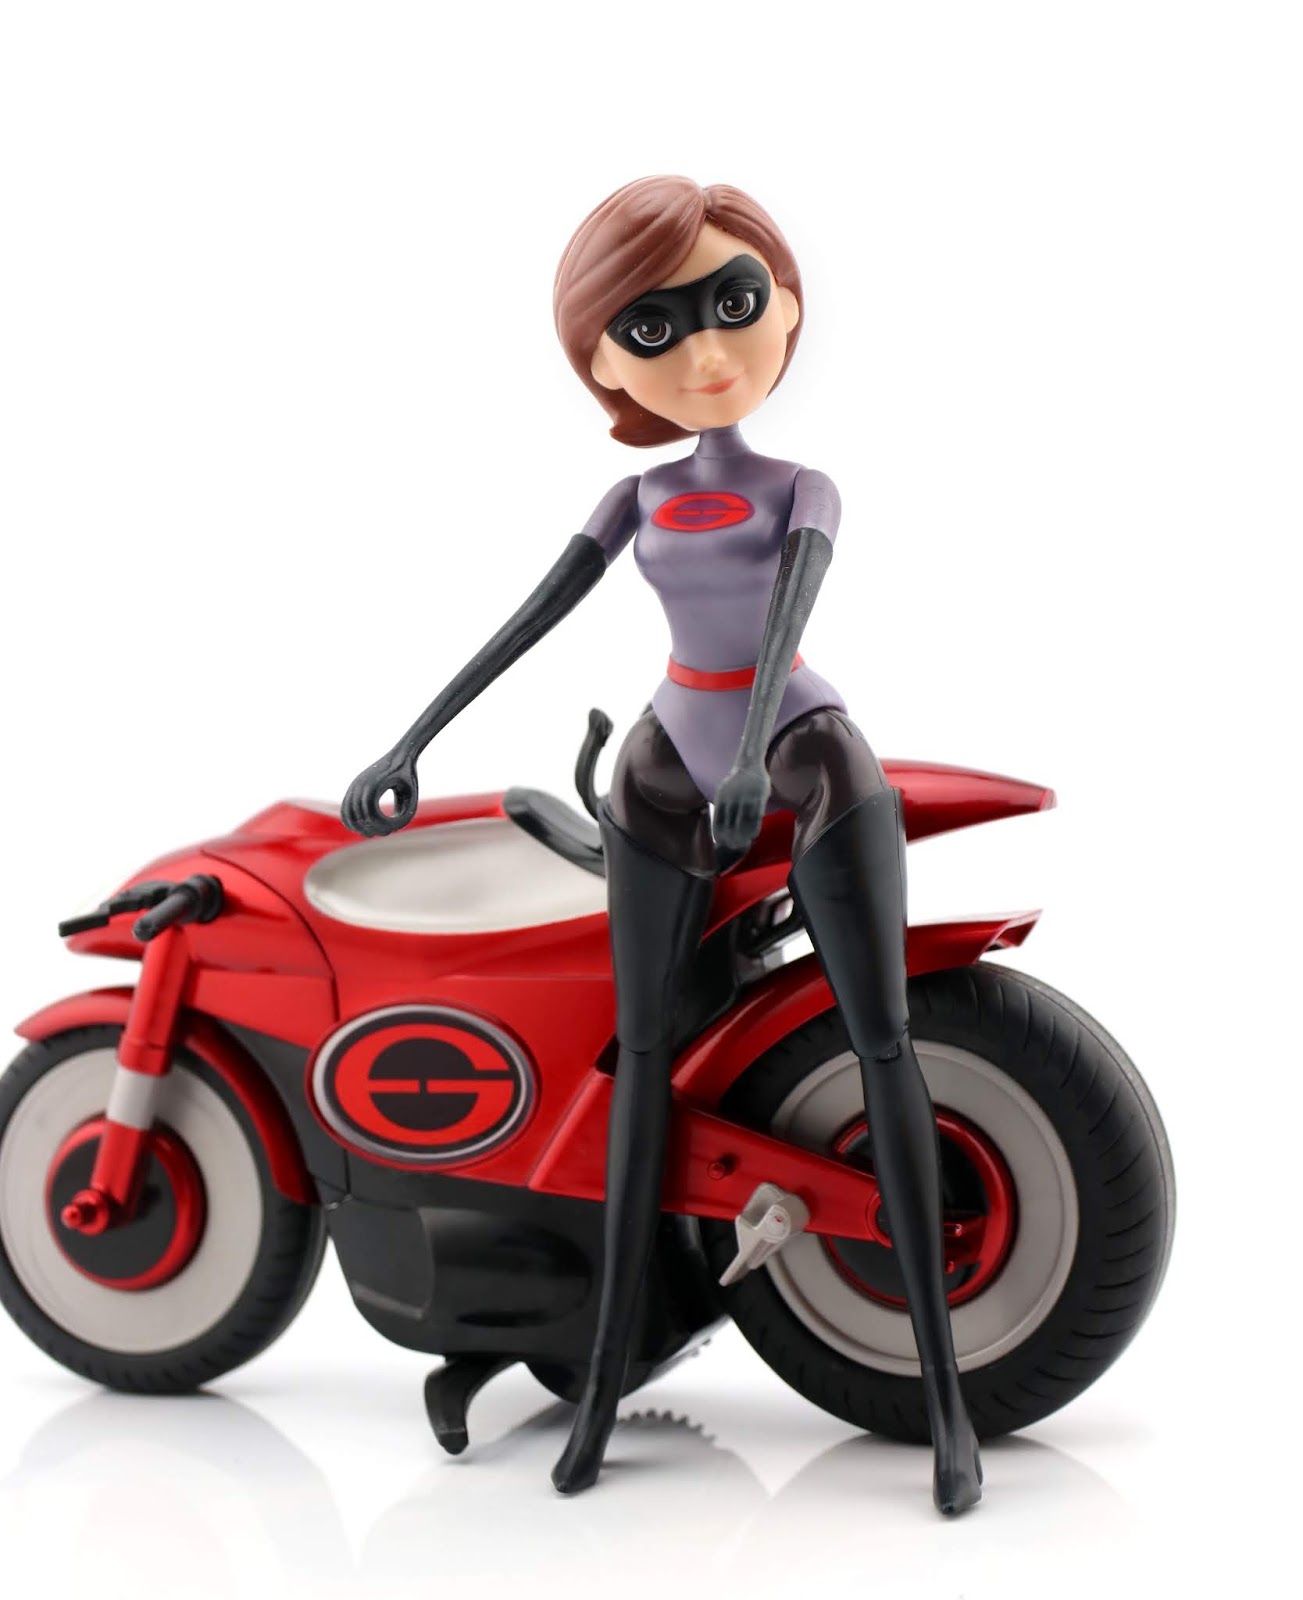 Incredibles 2 Jakks Toys Streching & Speeding Elasticycle Review